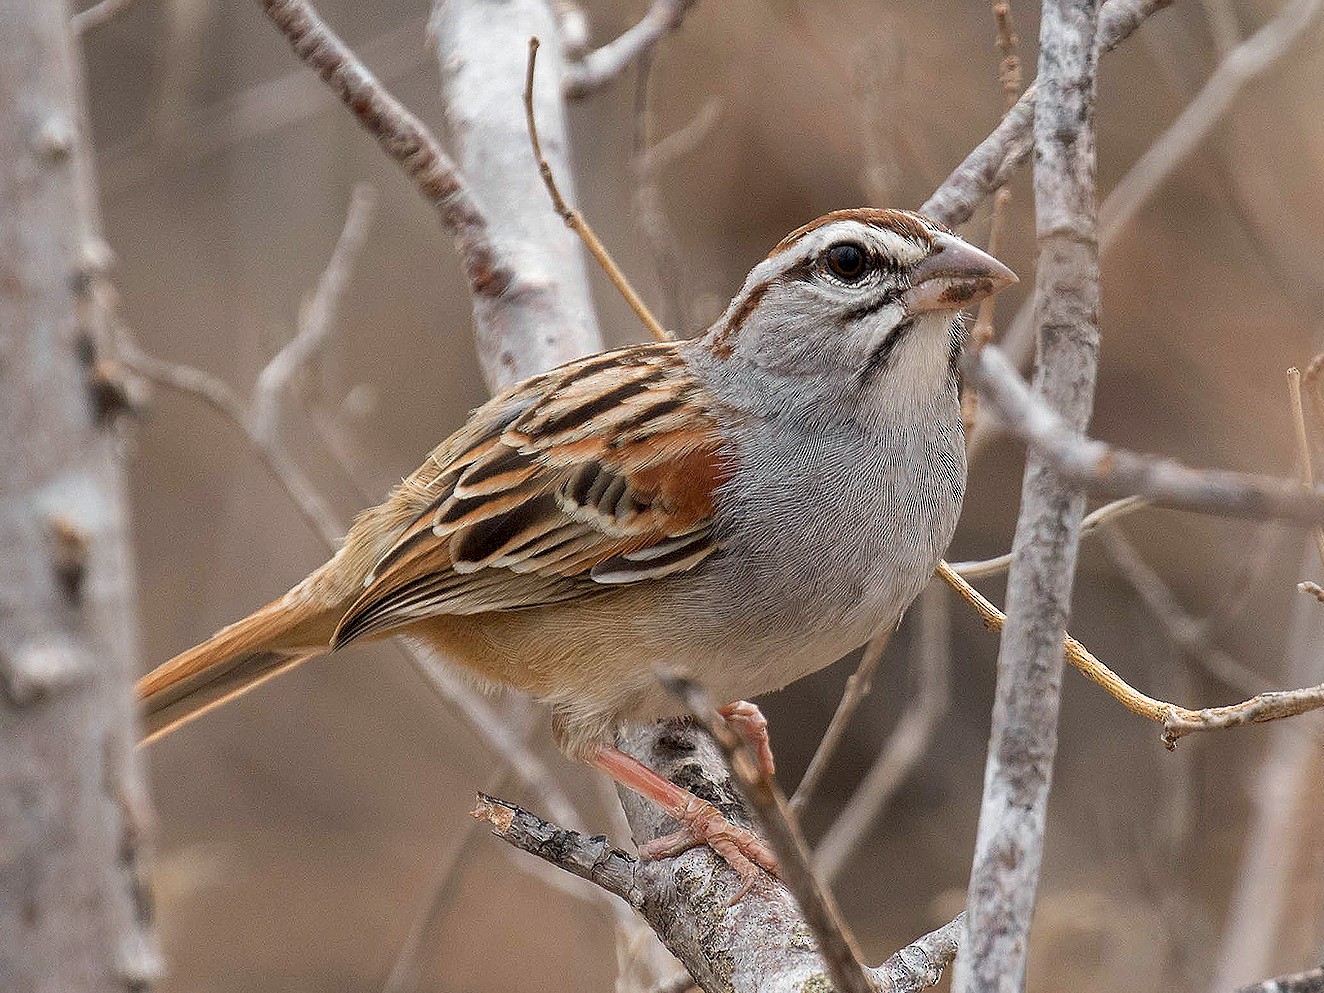 Cinnamon-tailed Sparrow - Ryan Shaw